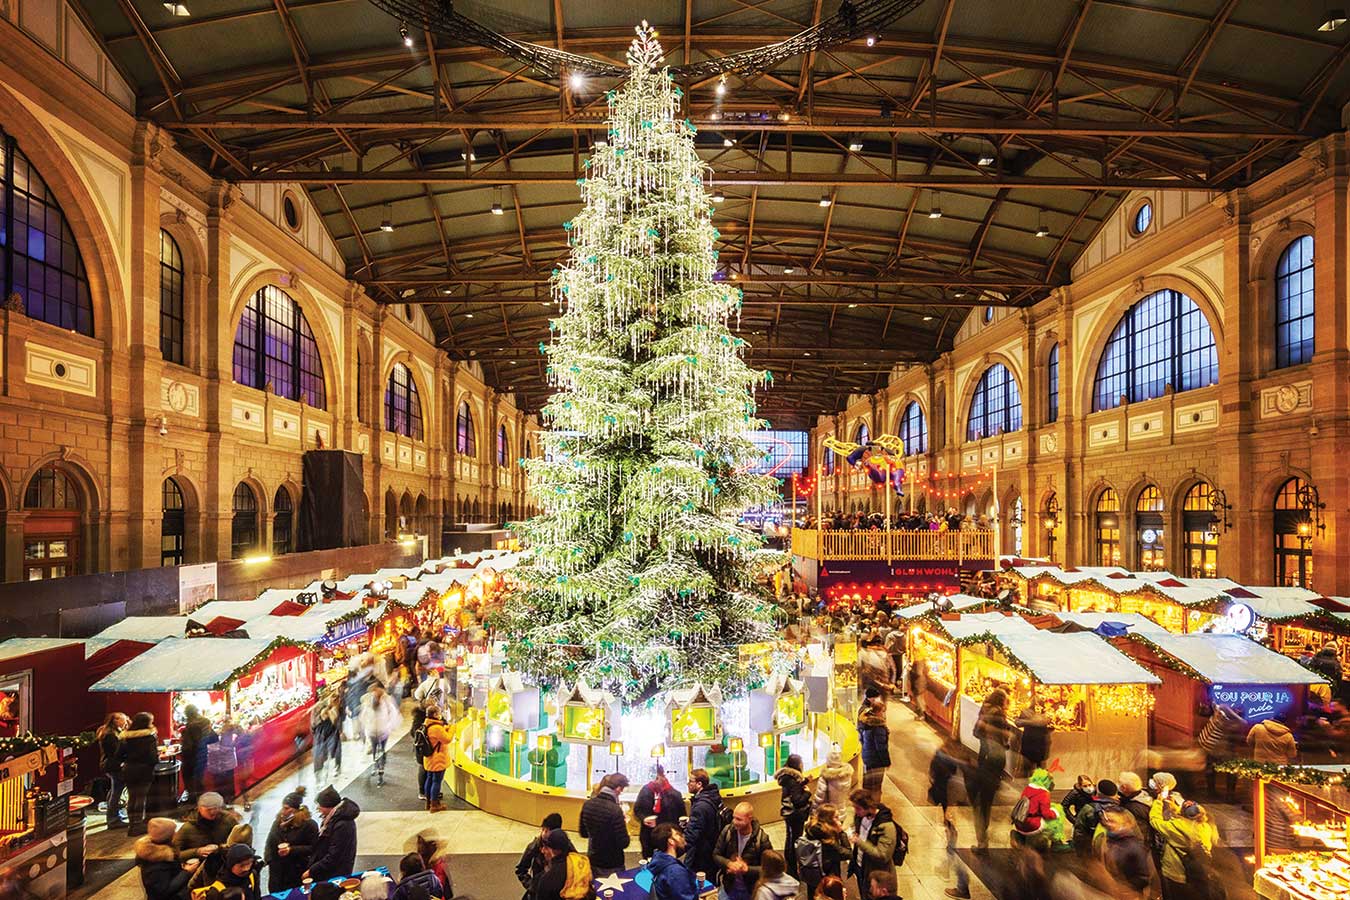 Christkindlimarkt, housed inside Zurich’s main station, is one of Europe’s largest indoor Christmas markets 